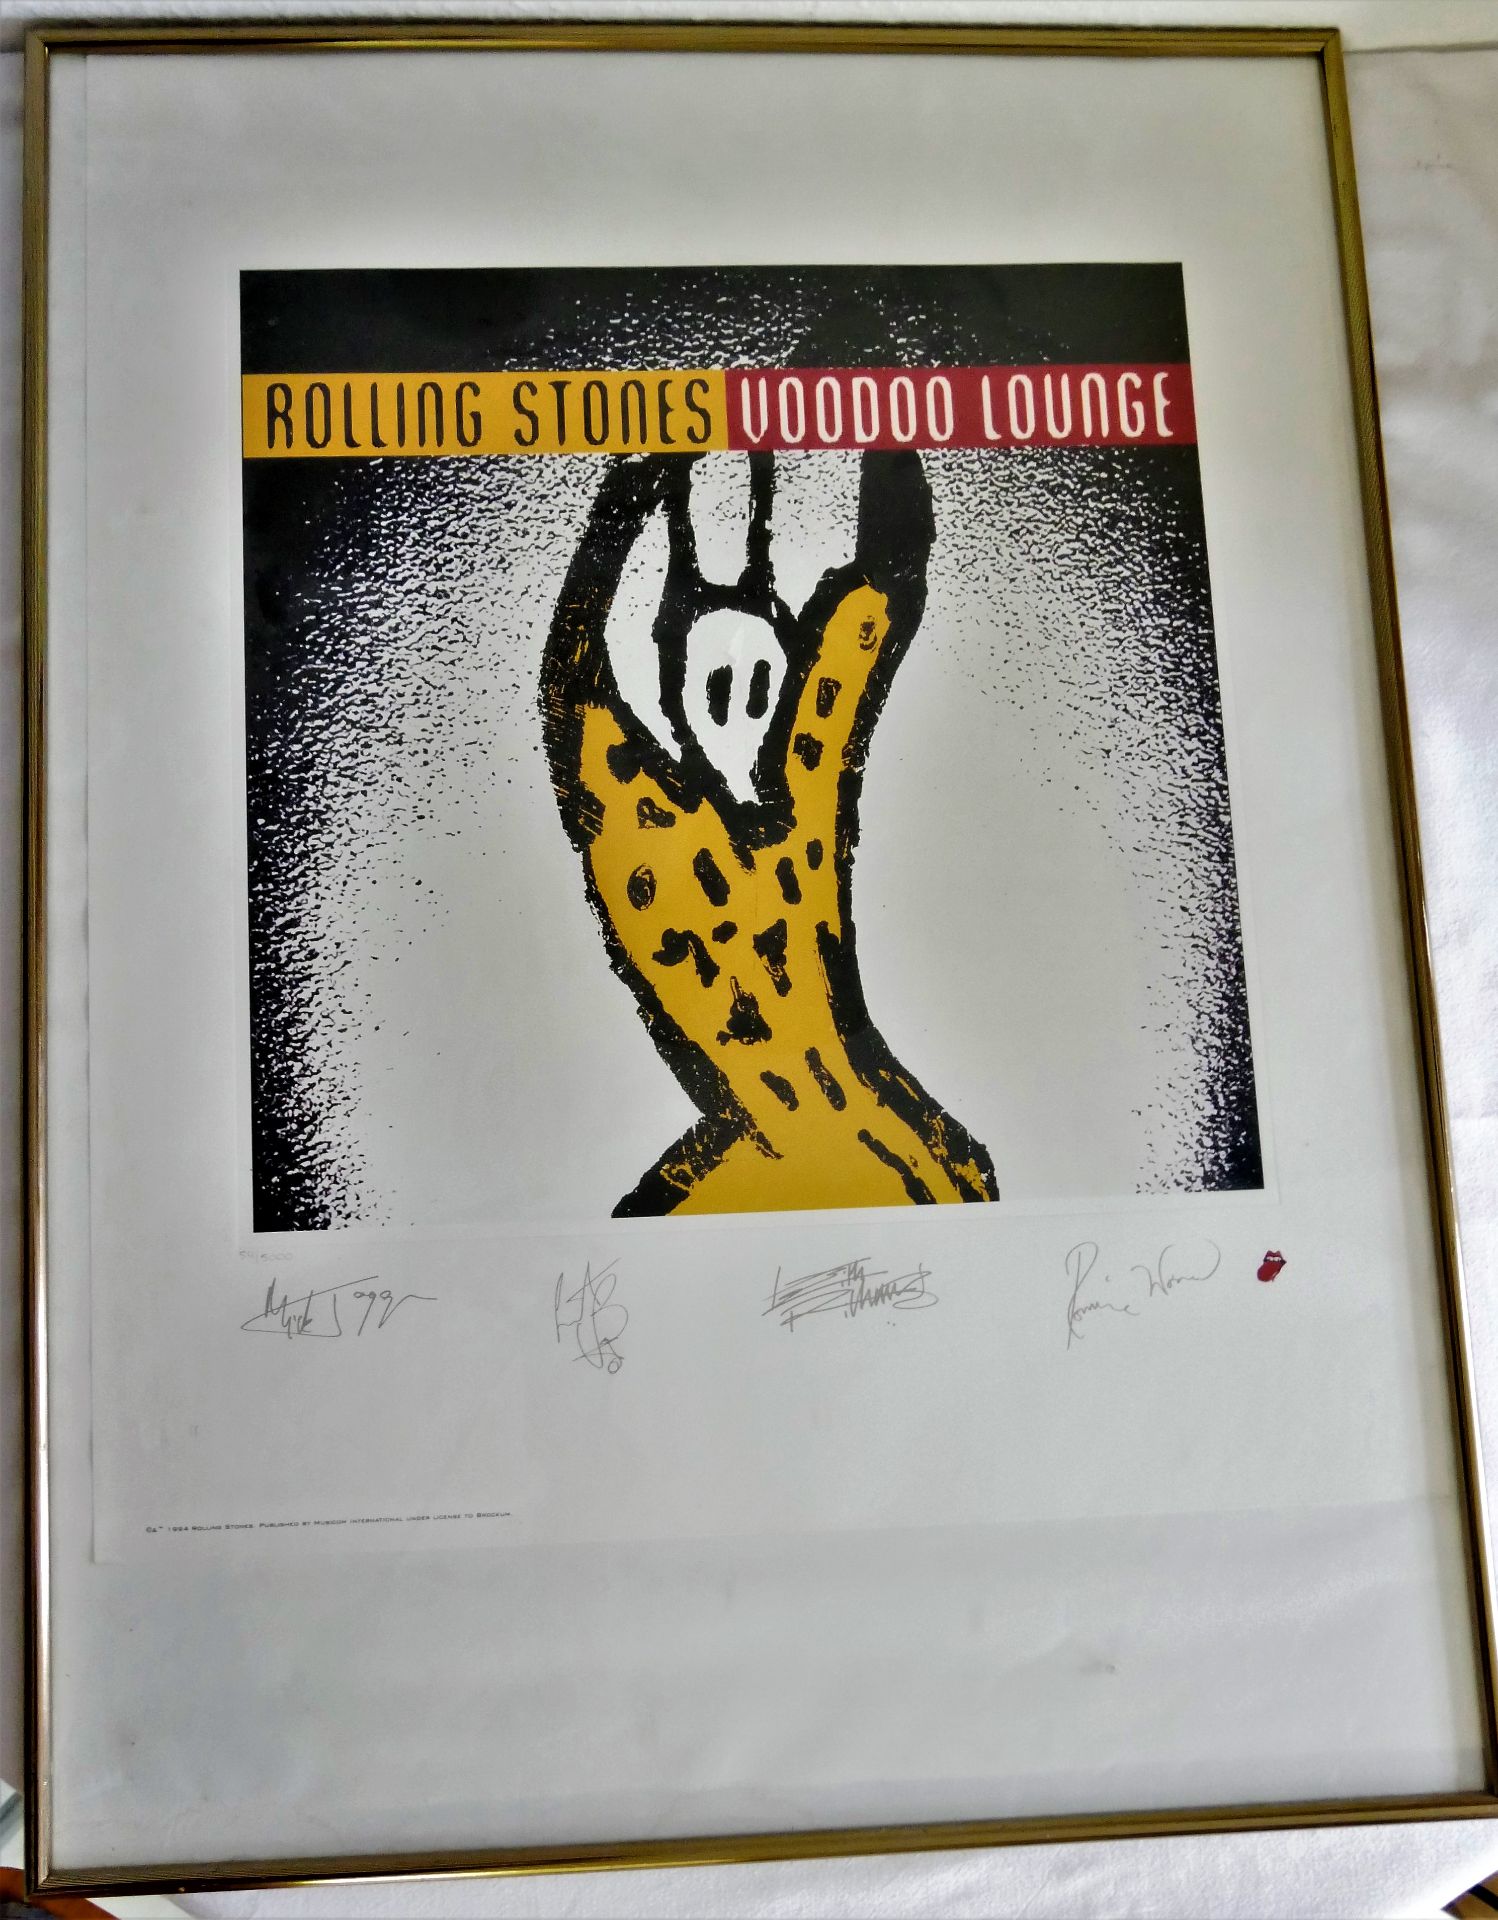 seltene Rolling Stones "Voodoo Lounge", signiert. Lithographie Rar Kunstdruck. Hier Nr. 54/5000.